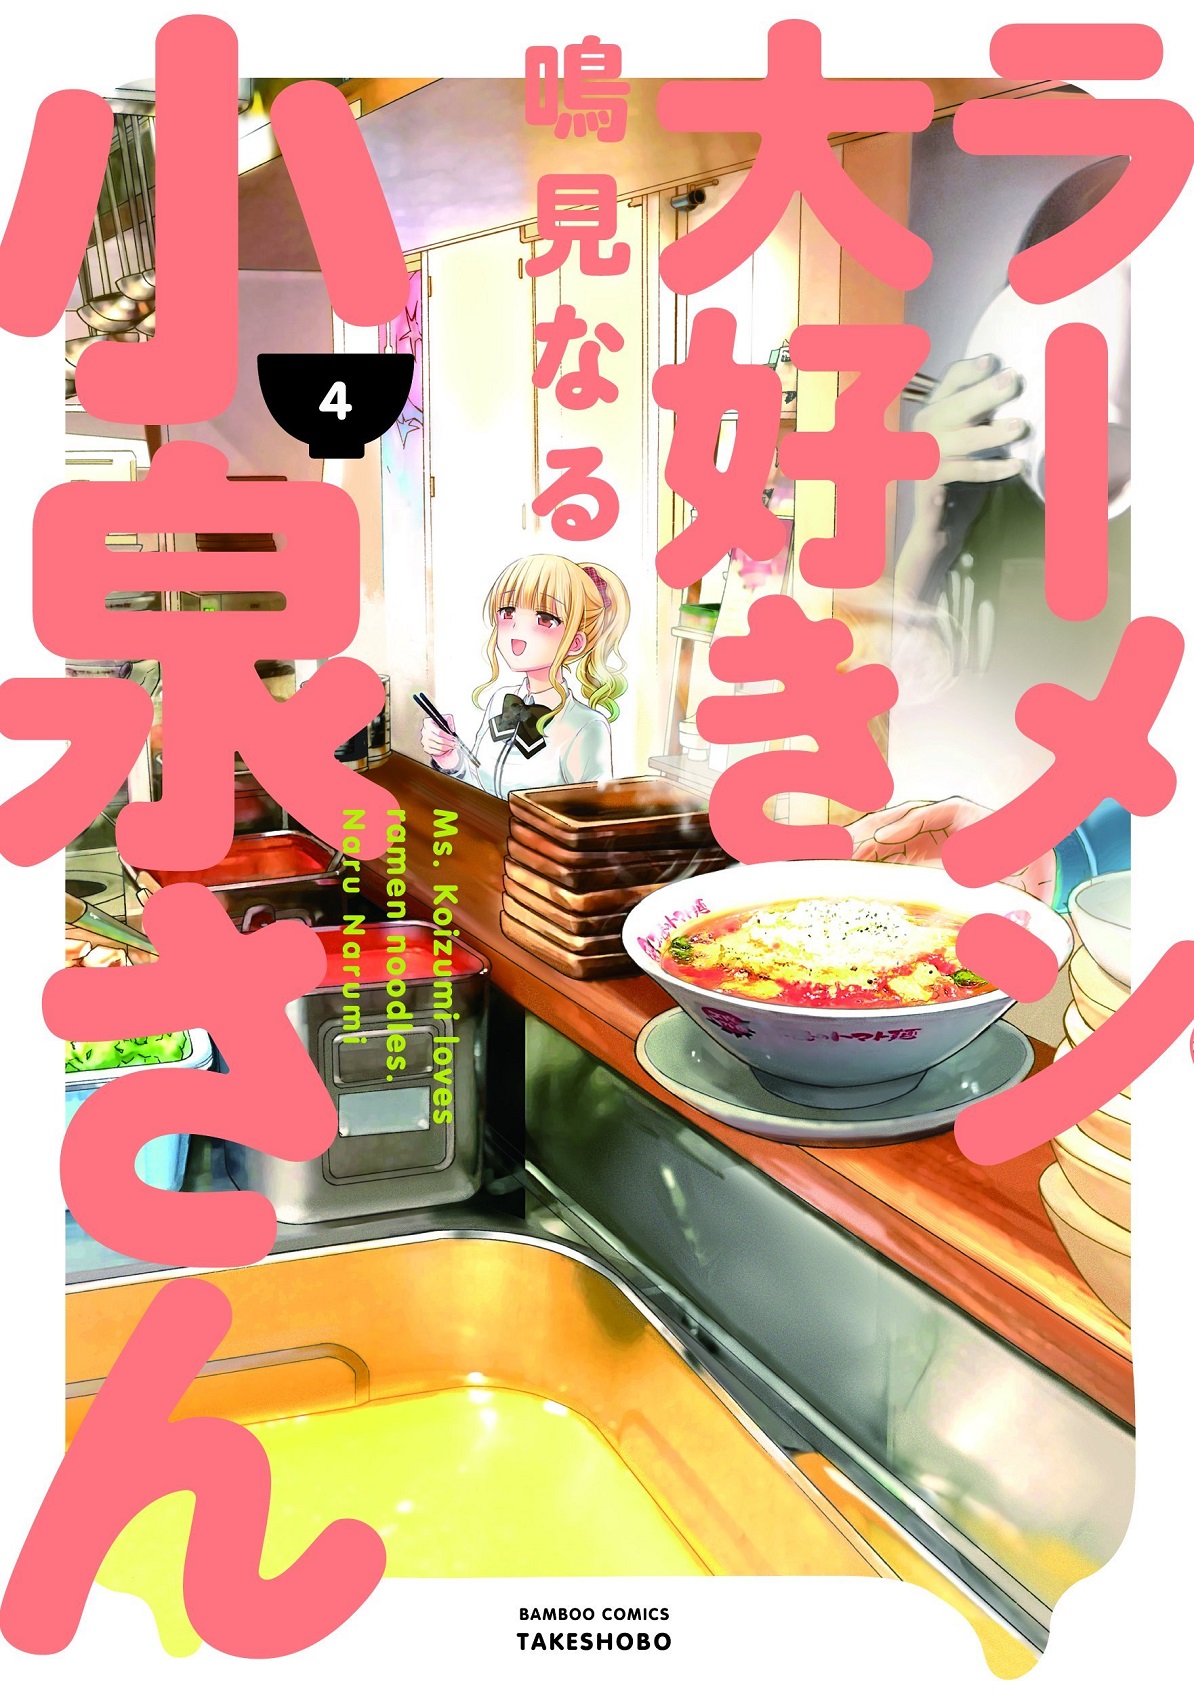 Ms. Koizumi Loves Ramen Noodles Wallpapers